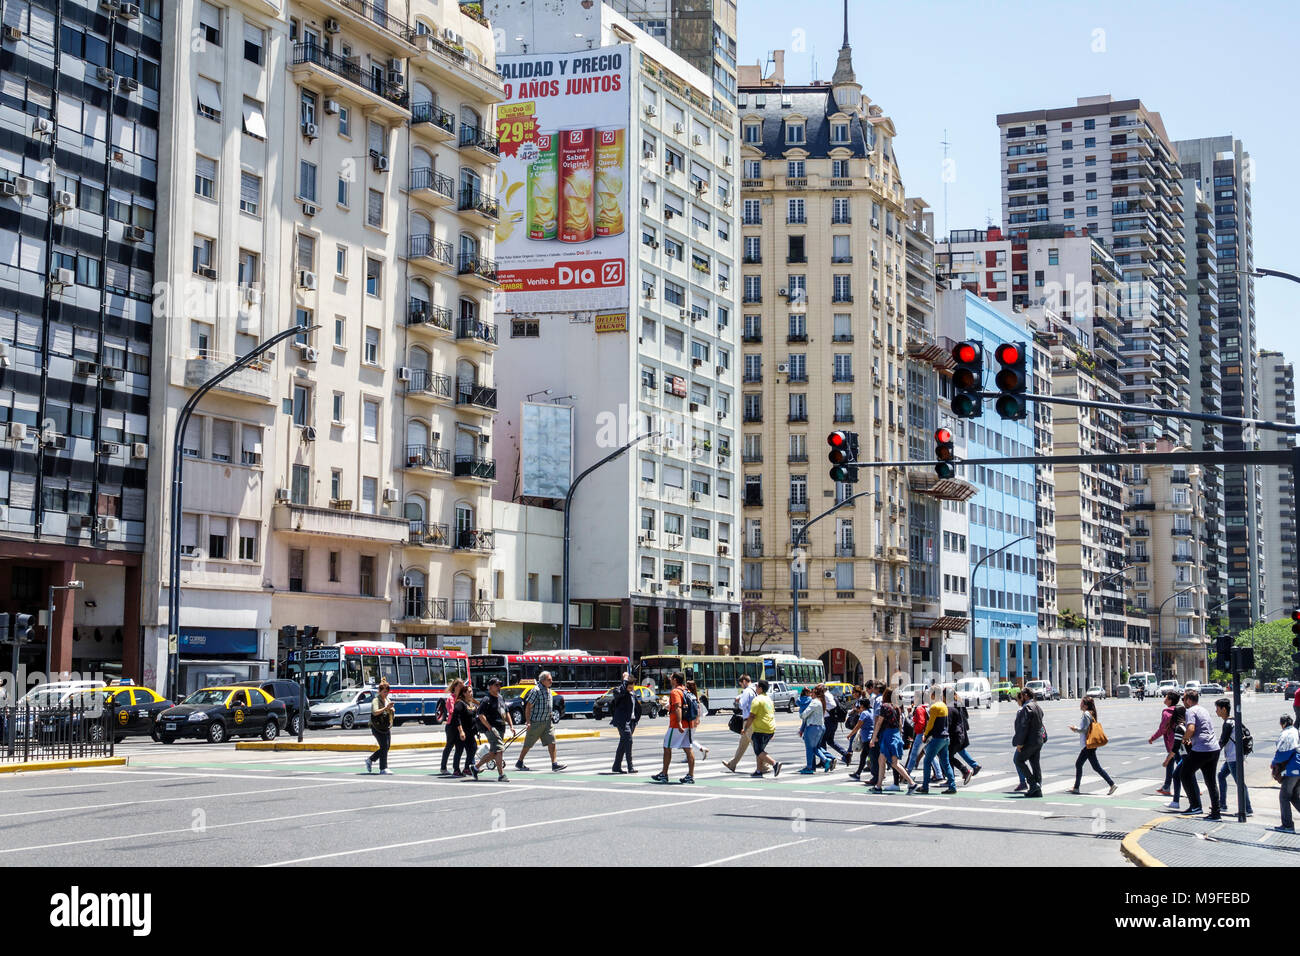 Buenos Aires Argentina,Avenida del Libertador,street scene,buildings,pedestrians,crossing,red light,taxi,bus,Hispanic,ARG171128156 Stock Photo